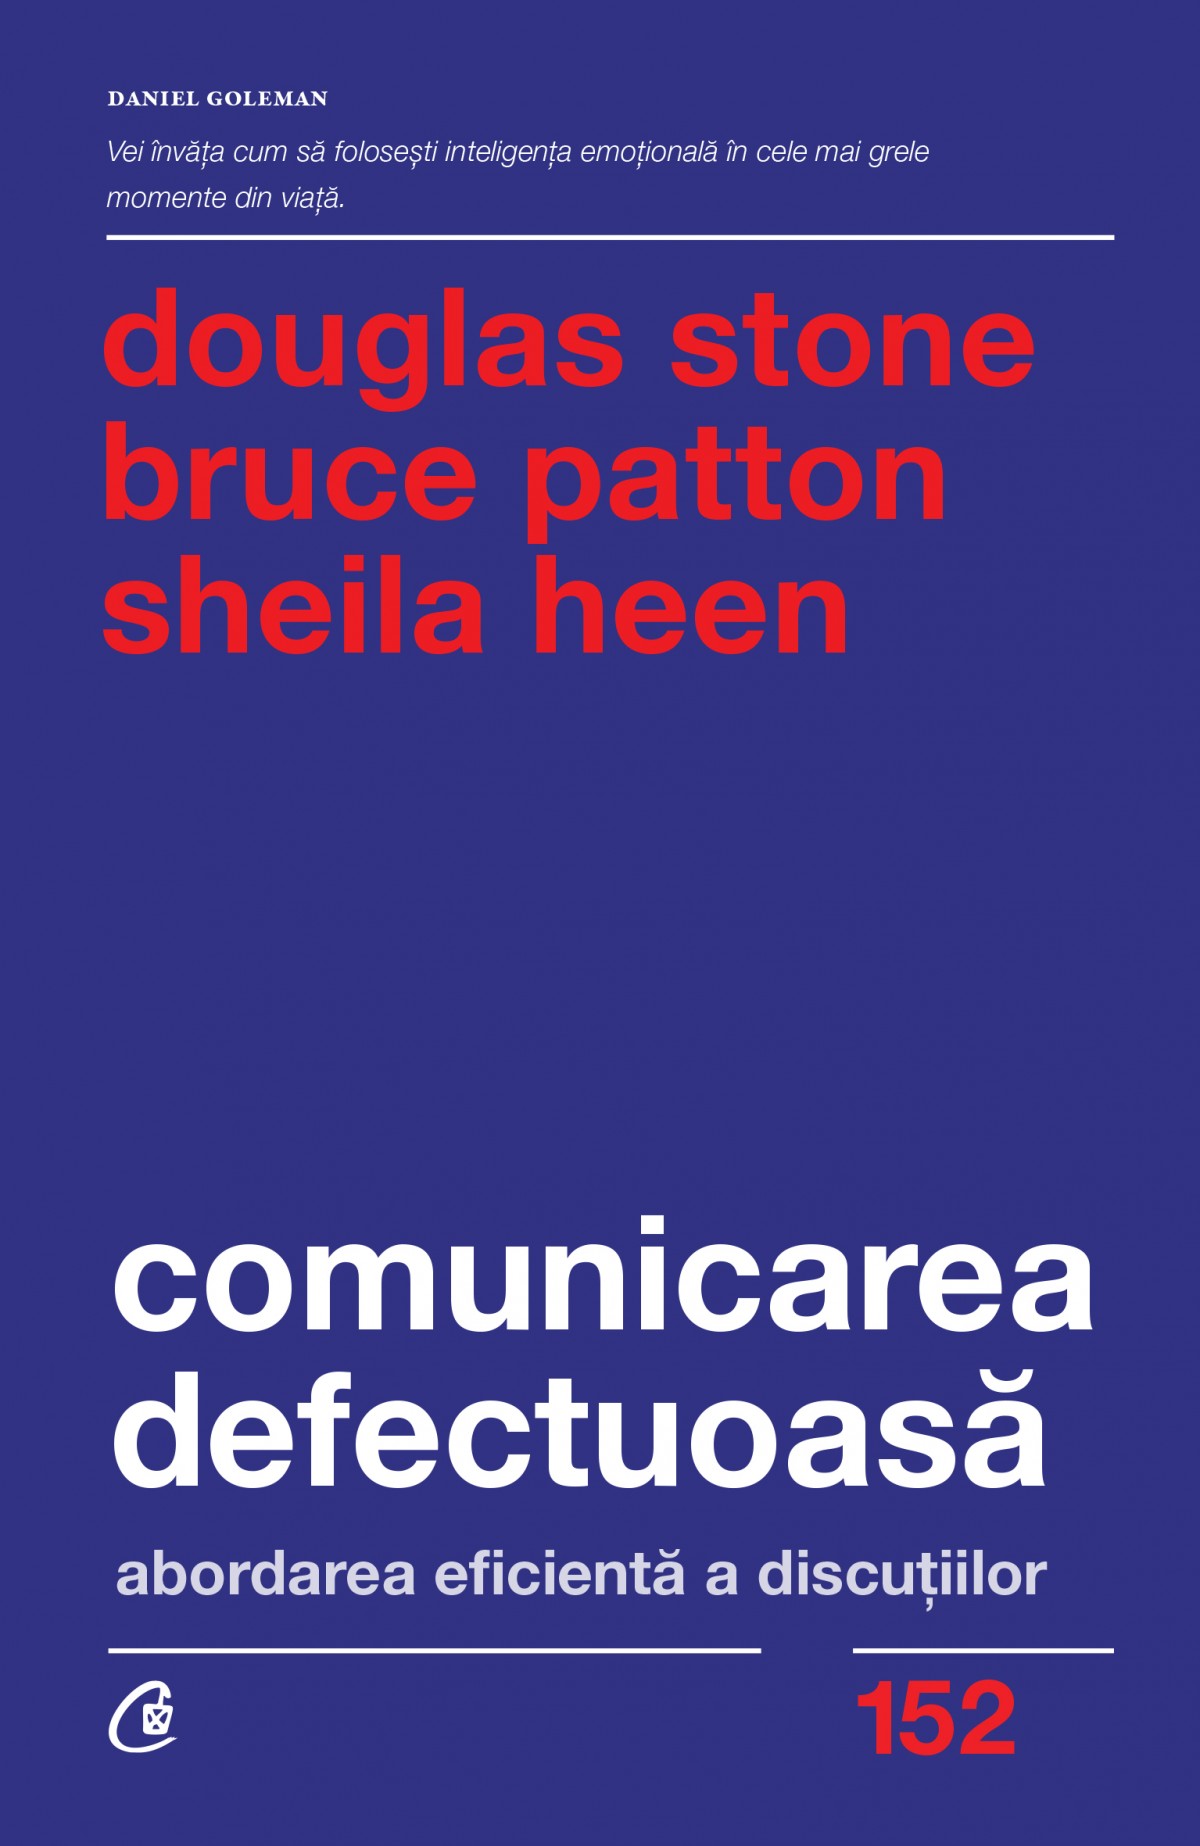 Comunicarea defectuoasa | Sheila Heen, Douglas Stone, Bruce Patton carturesti.ro